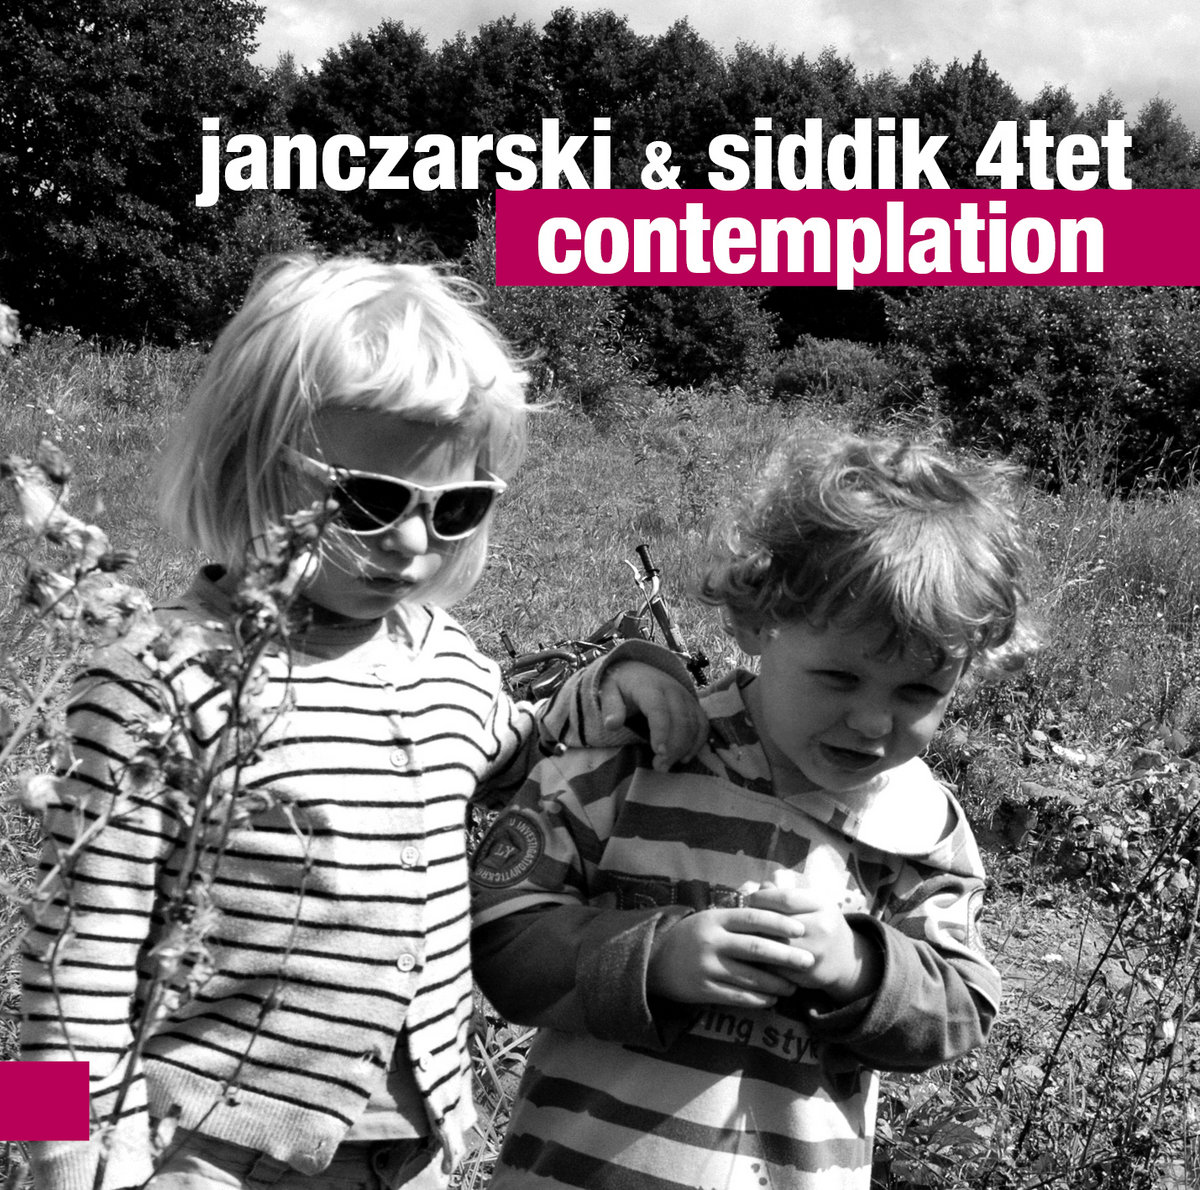 Contemplation  Janczarski  Siddik 4tet  For Tune